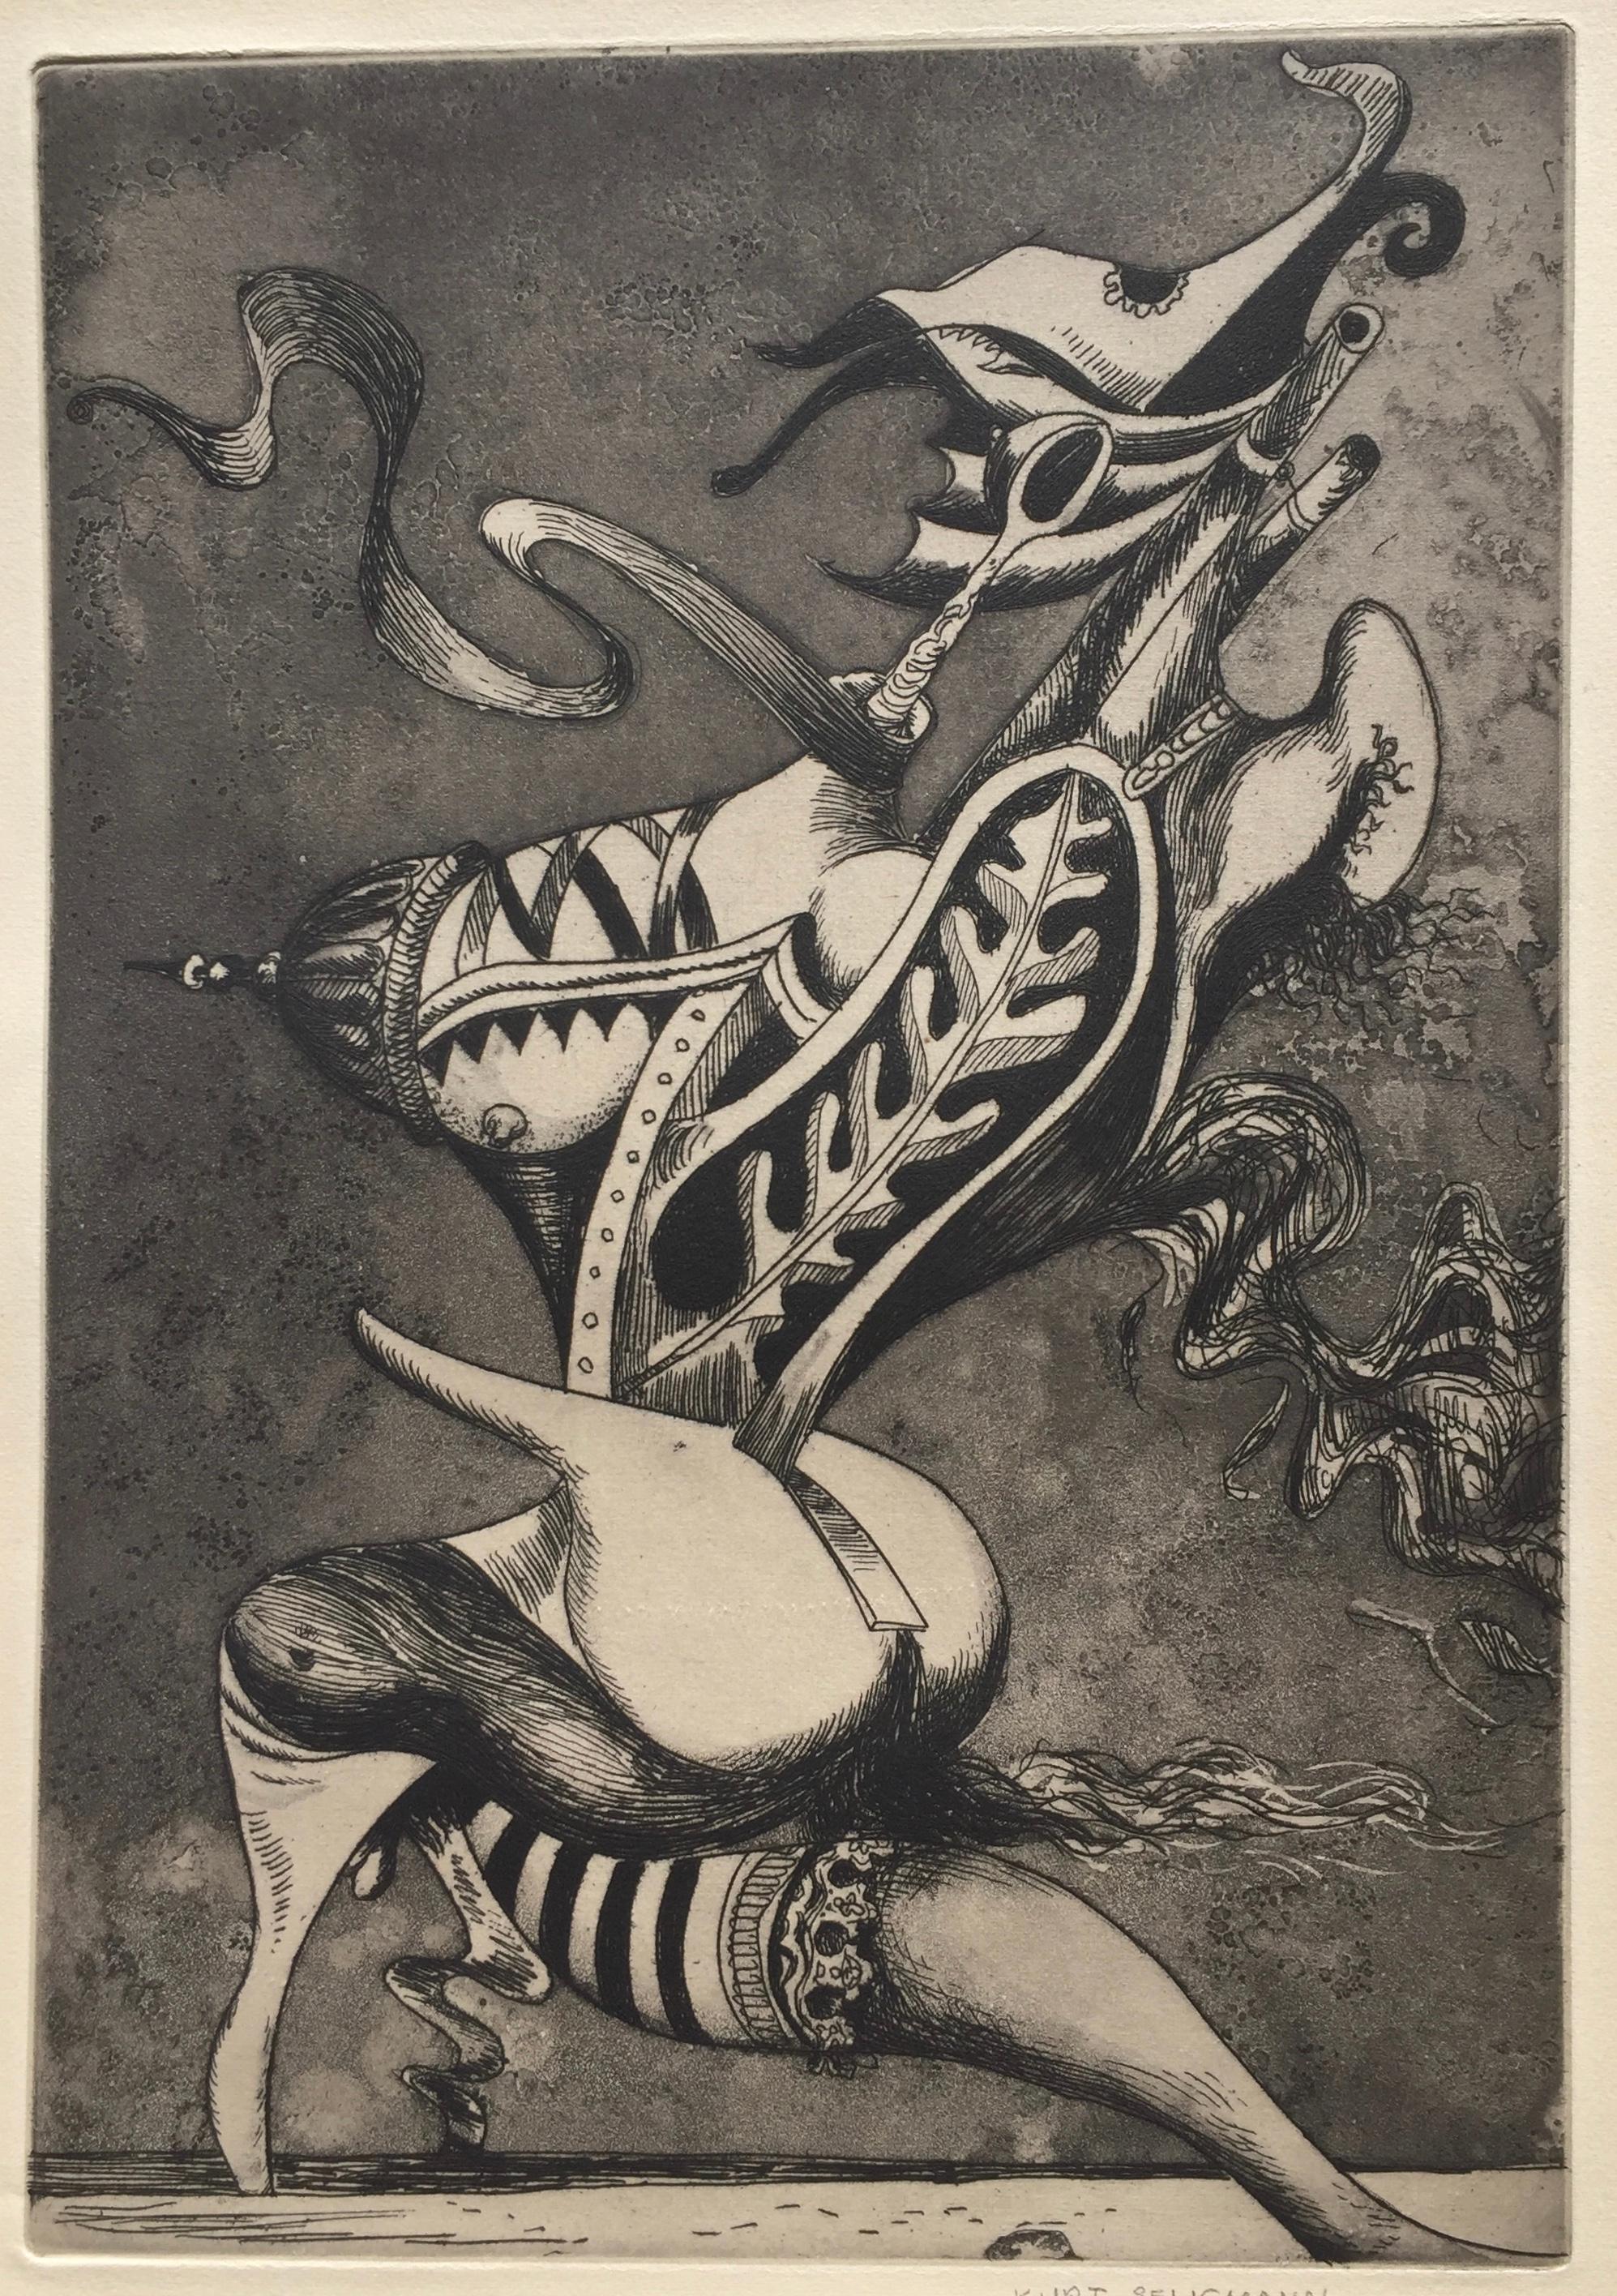  LA SORCIERE - (The Witch) - Print by Kurt Seligmann